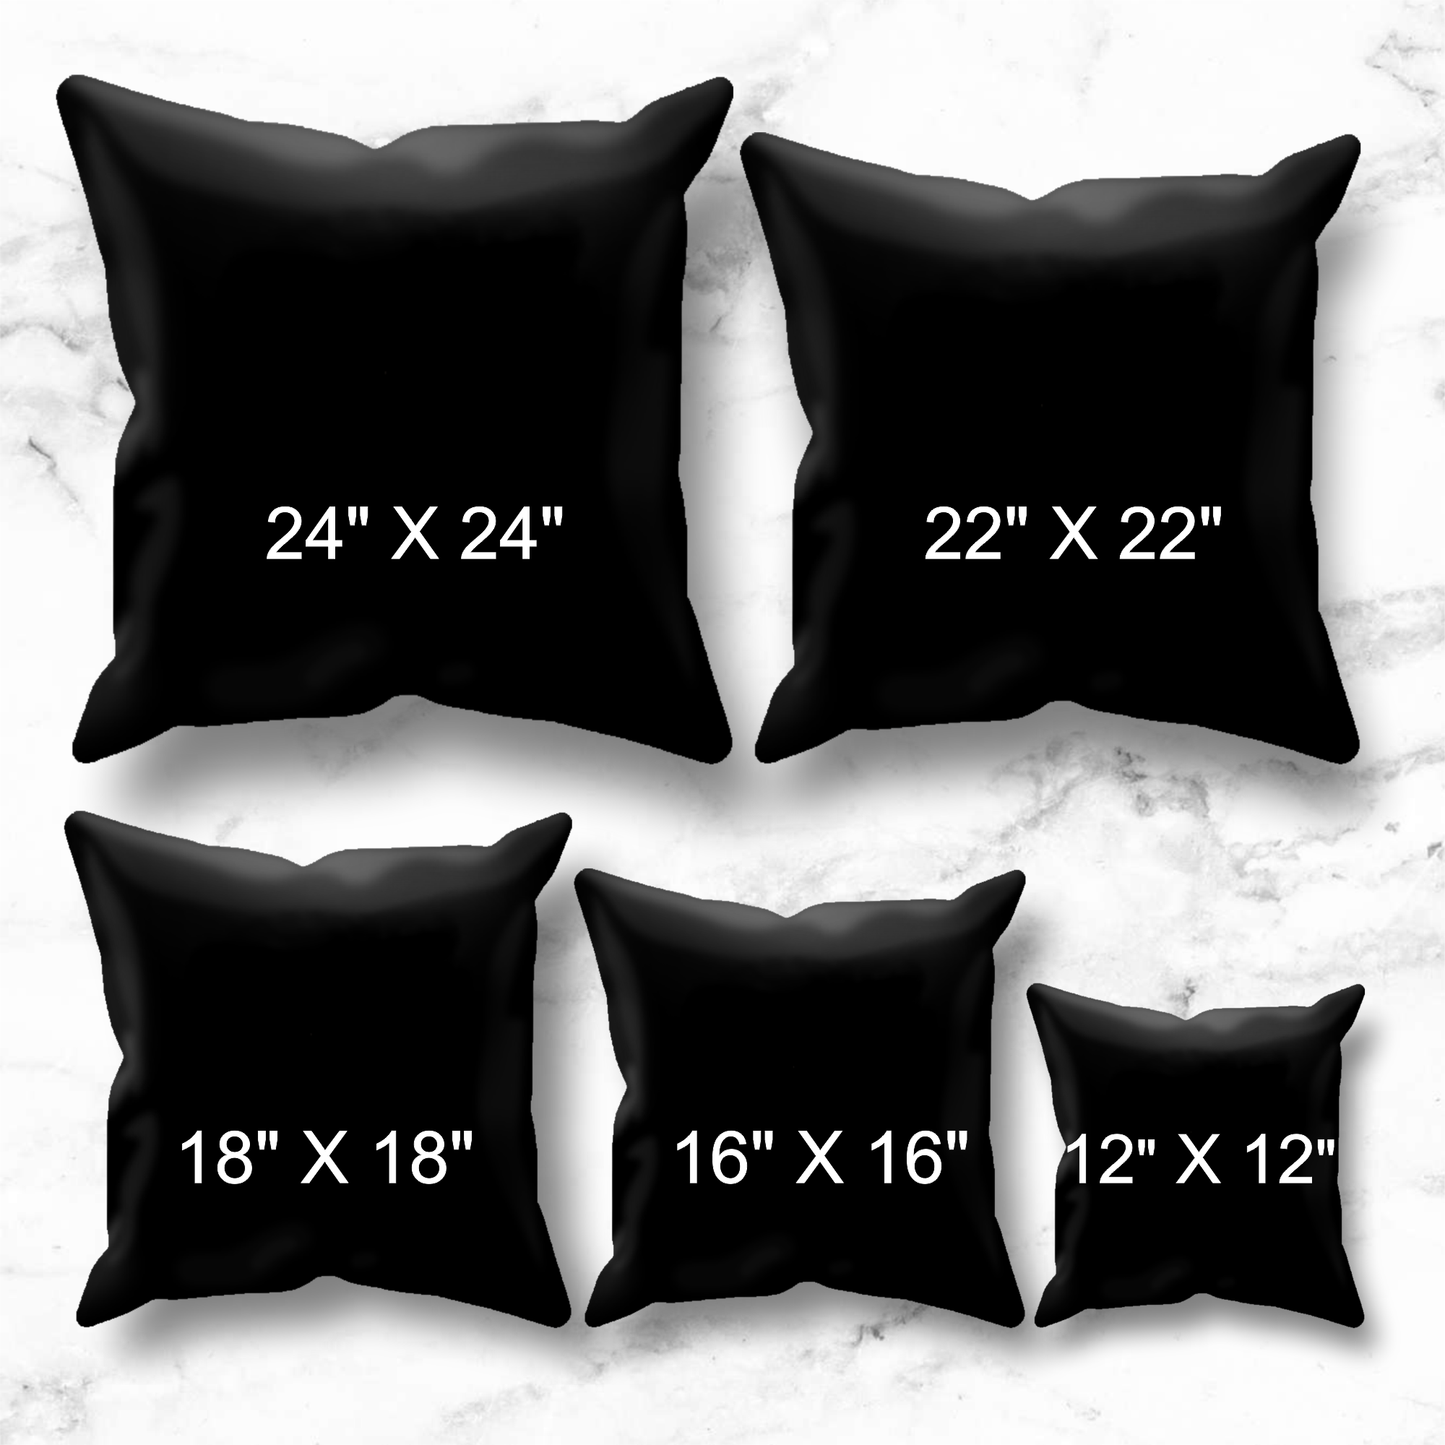 Black Chug Cushion with Pillow Insert